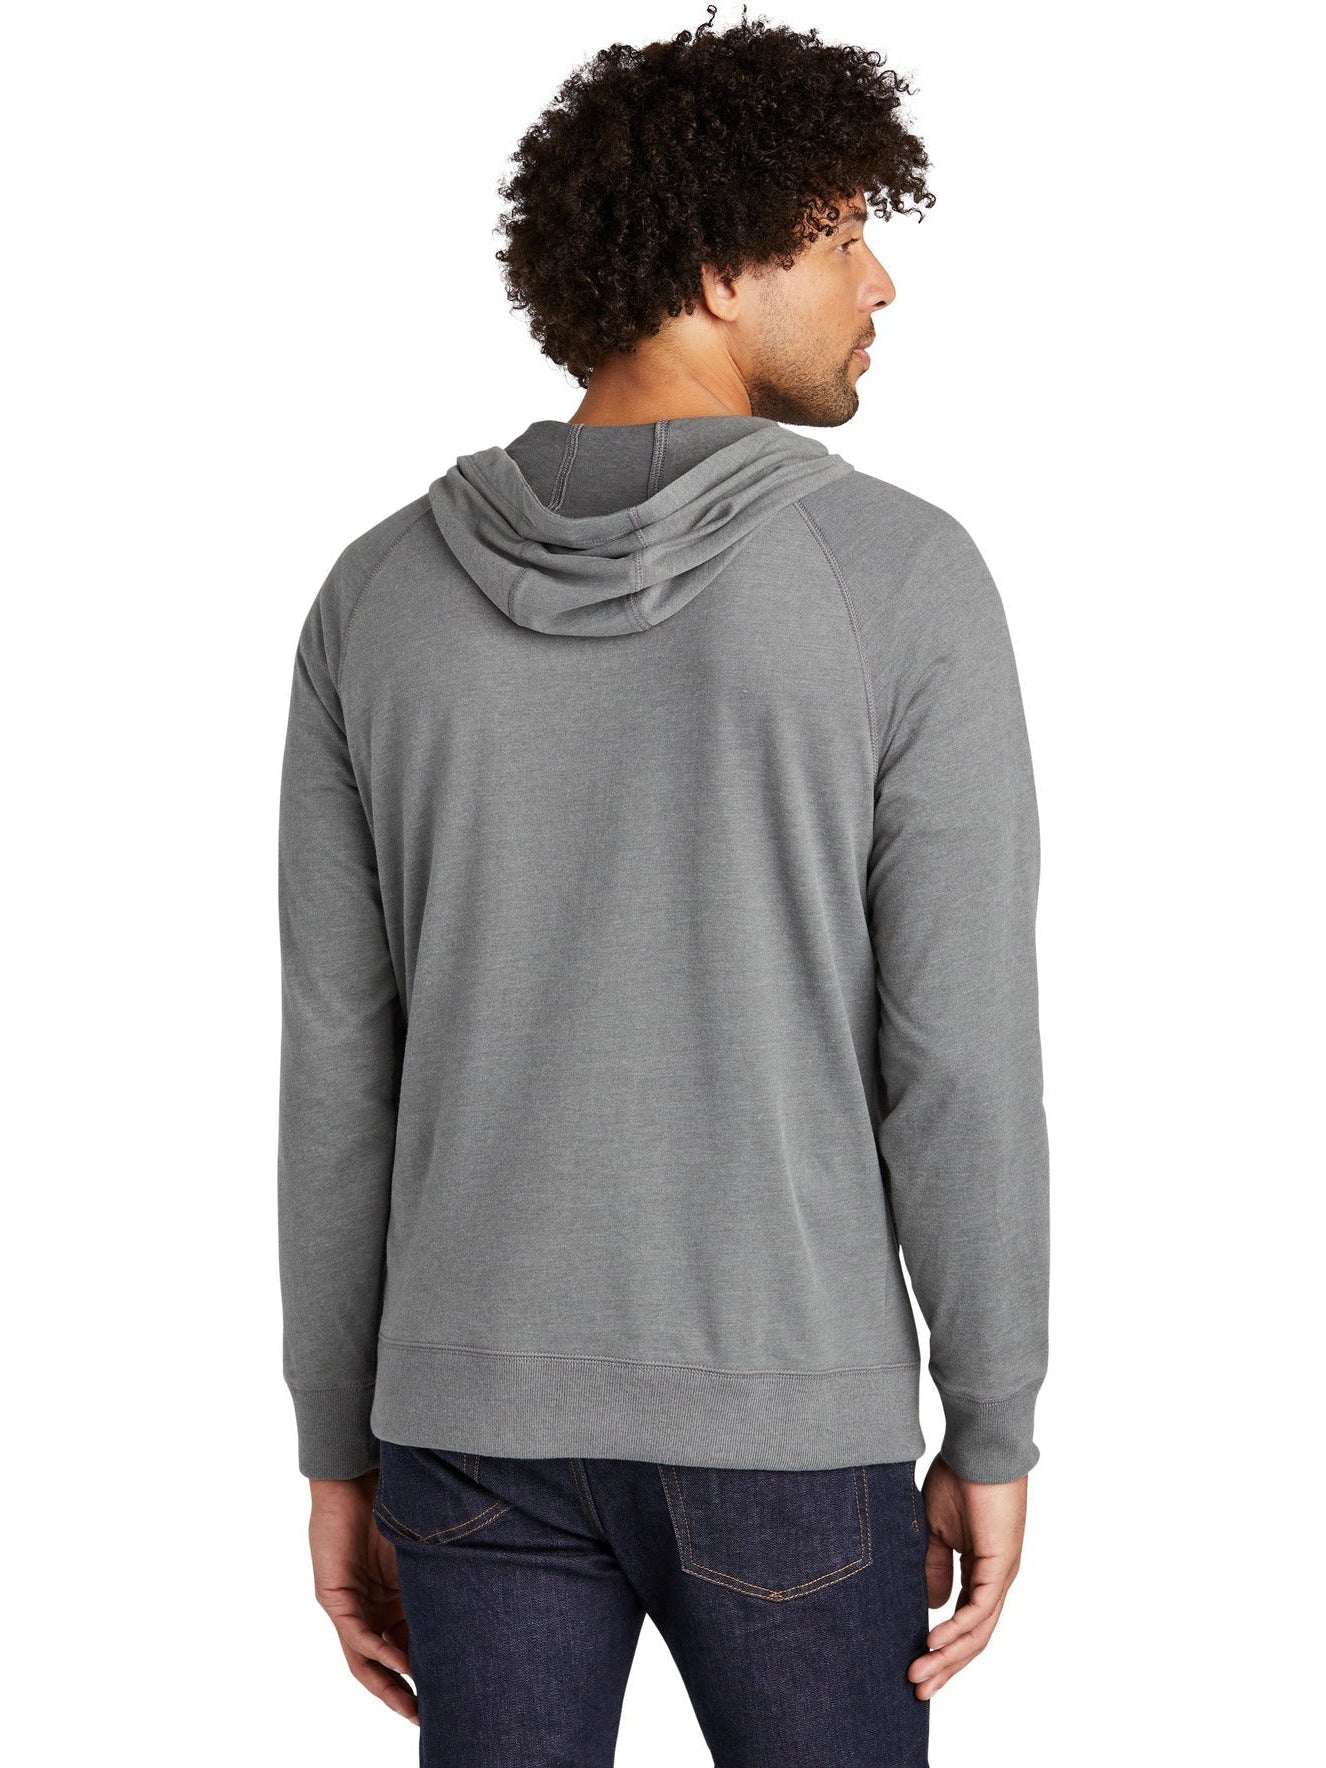 New Era NEA122 Full-Zip Sweatshirt with Custom Embroidery